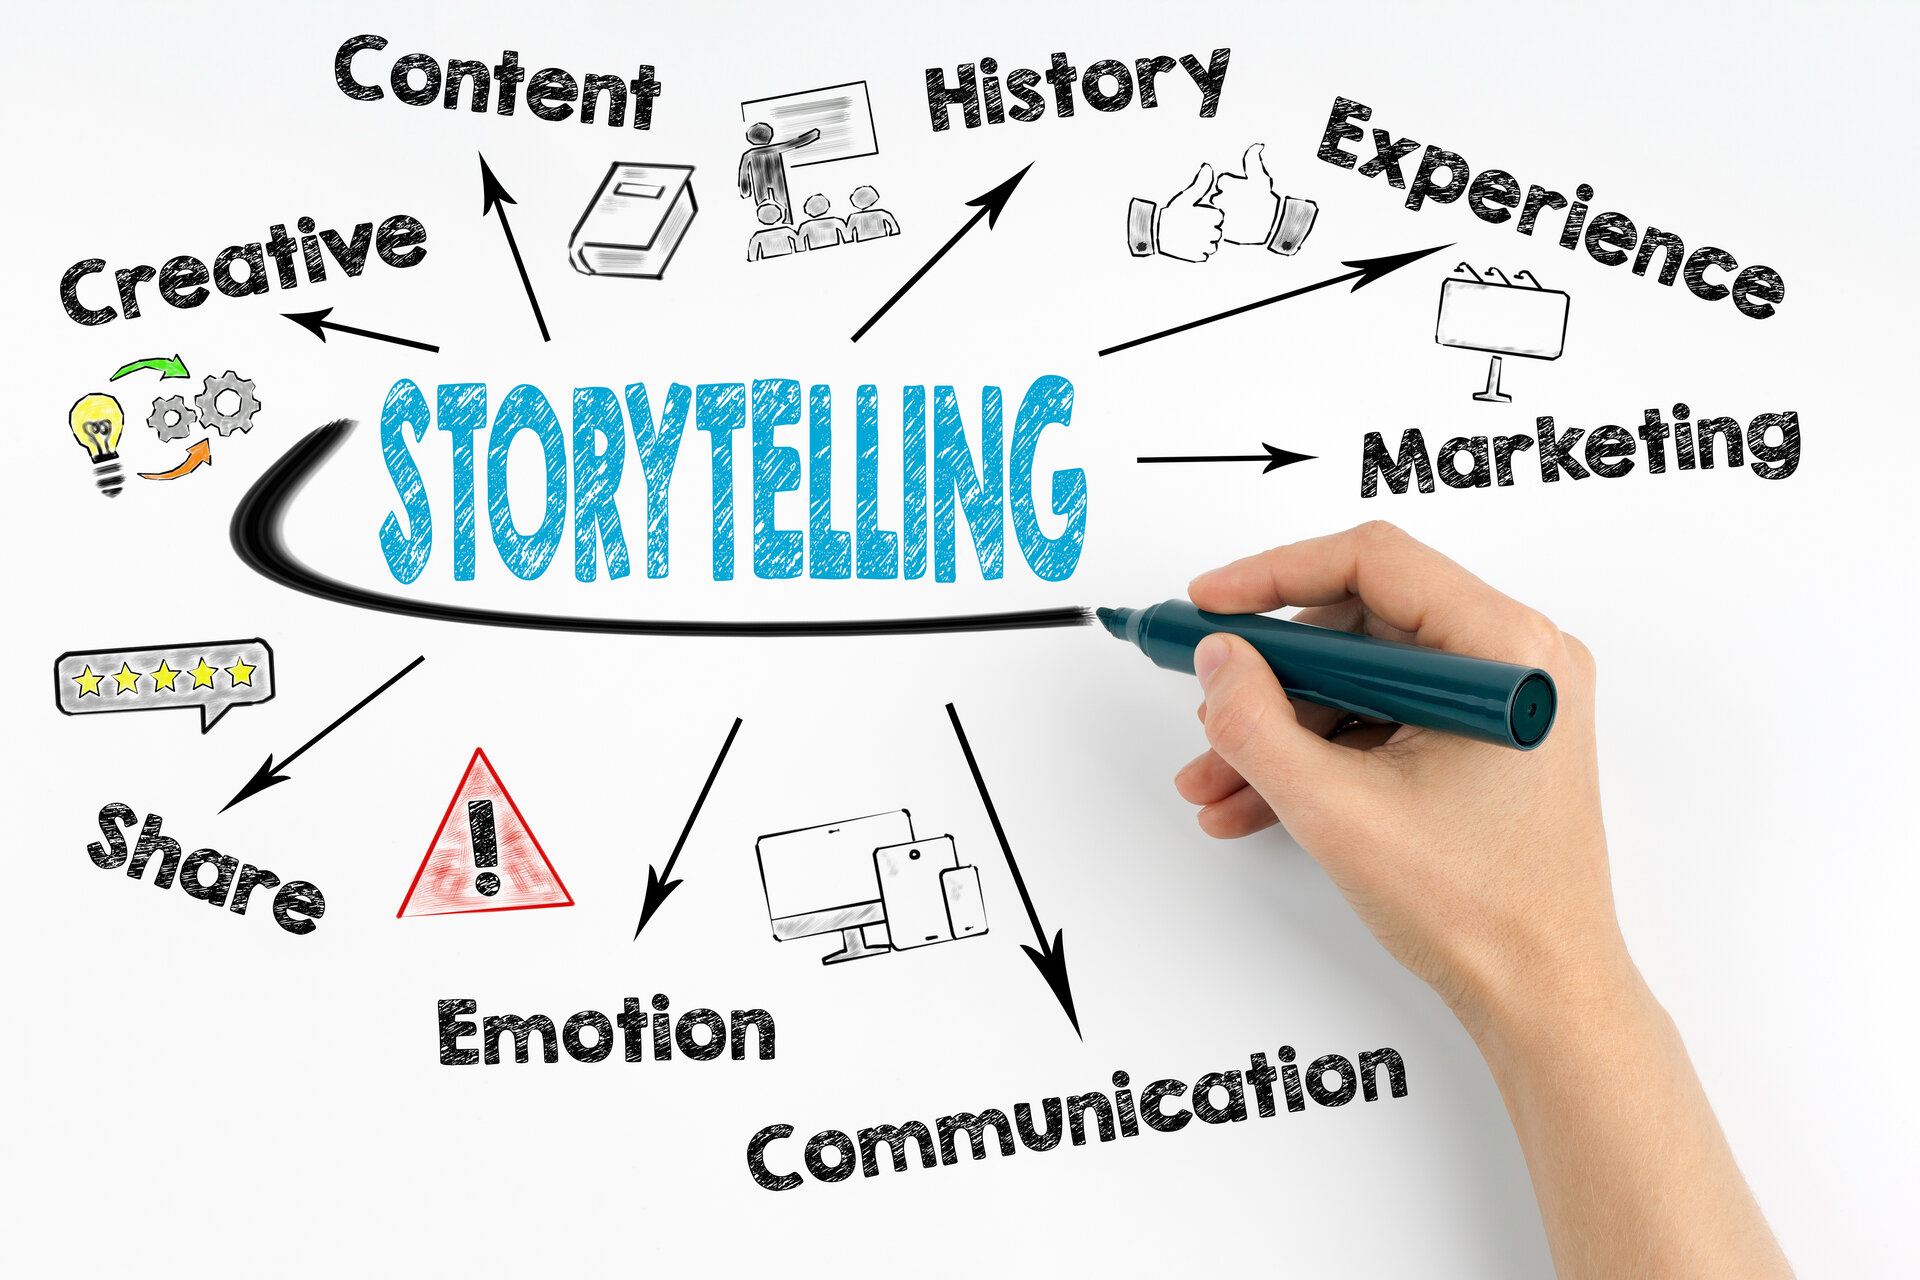 Storytelling Concept